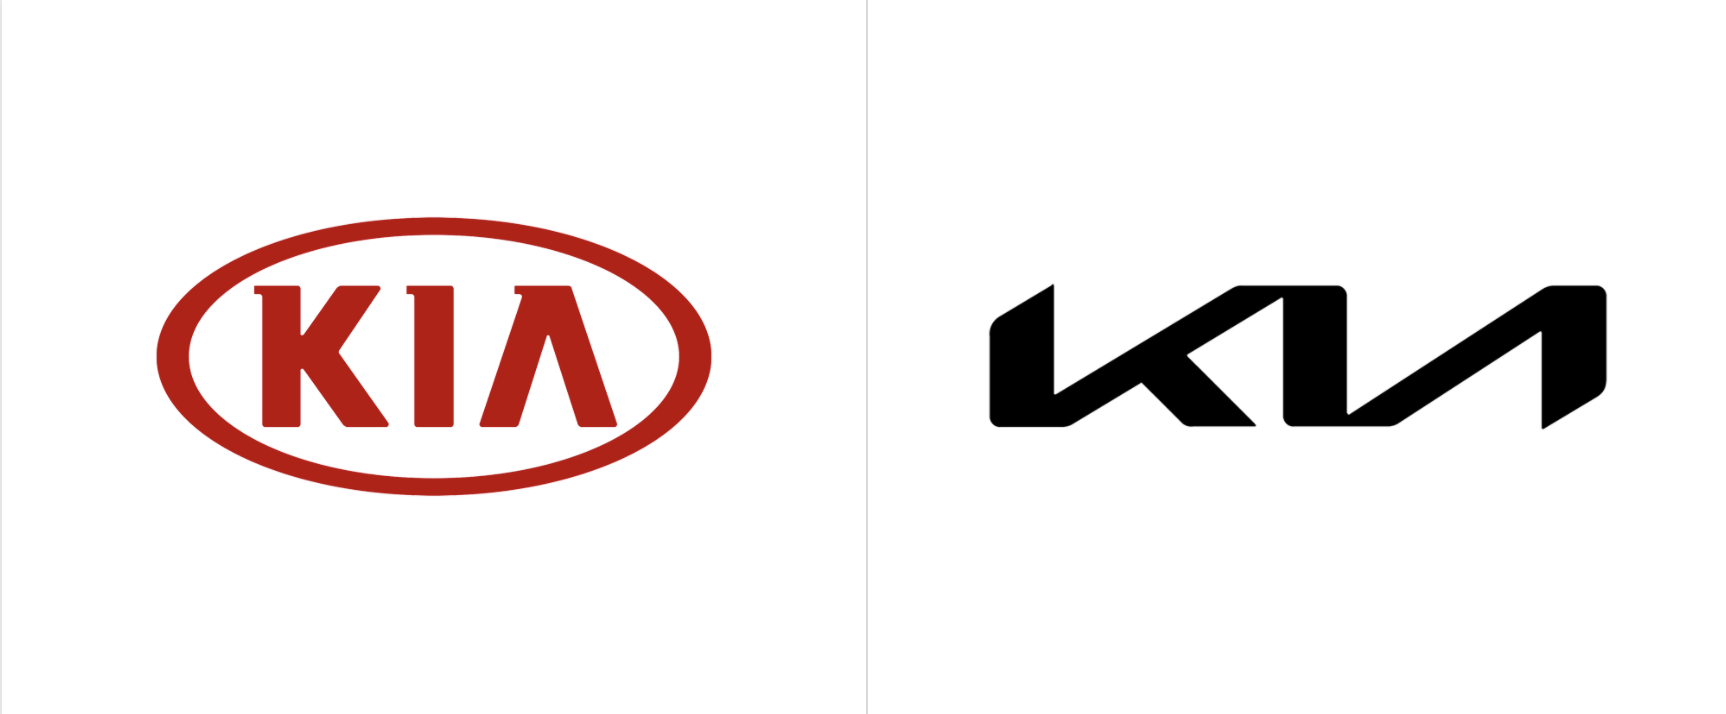 Auto brand trends: KIA logo